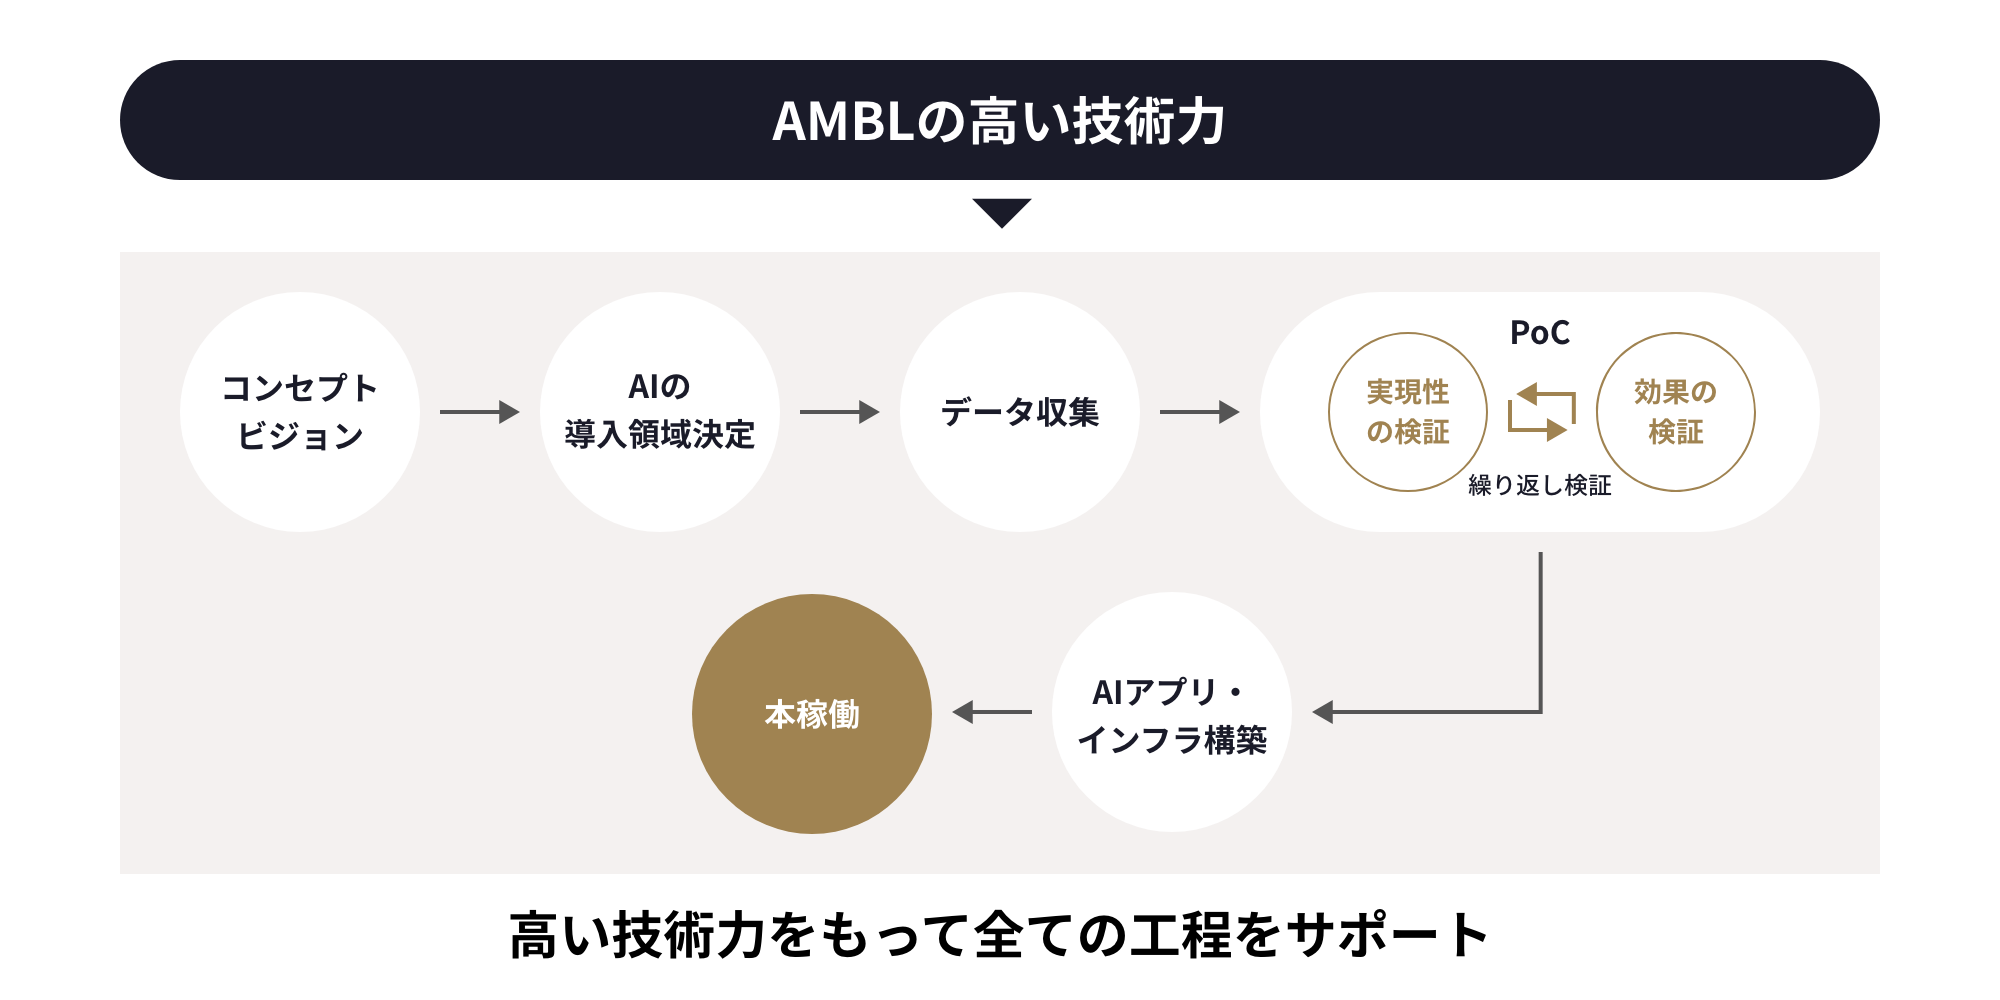 AMBLの高い技術力の図版